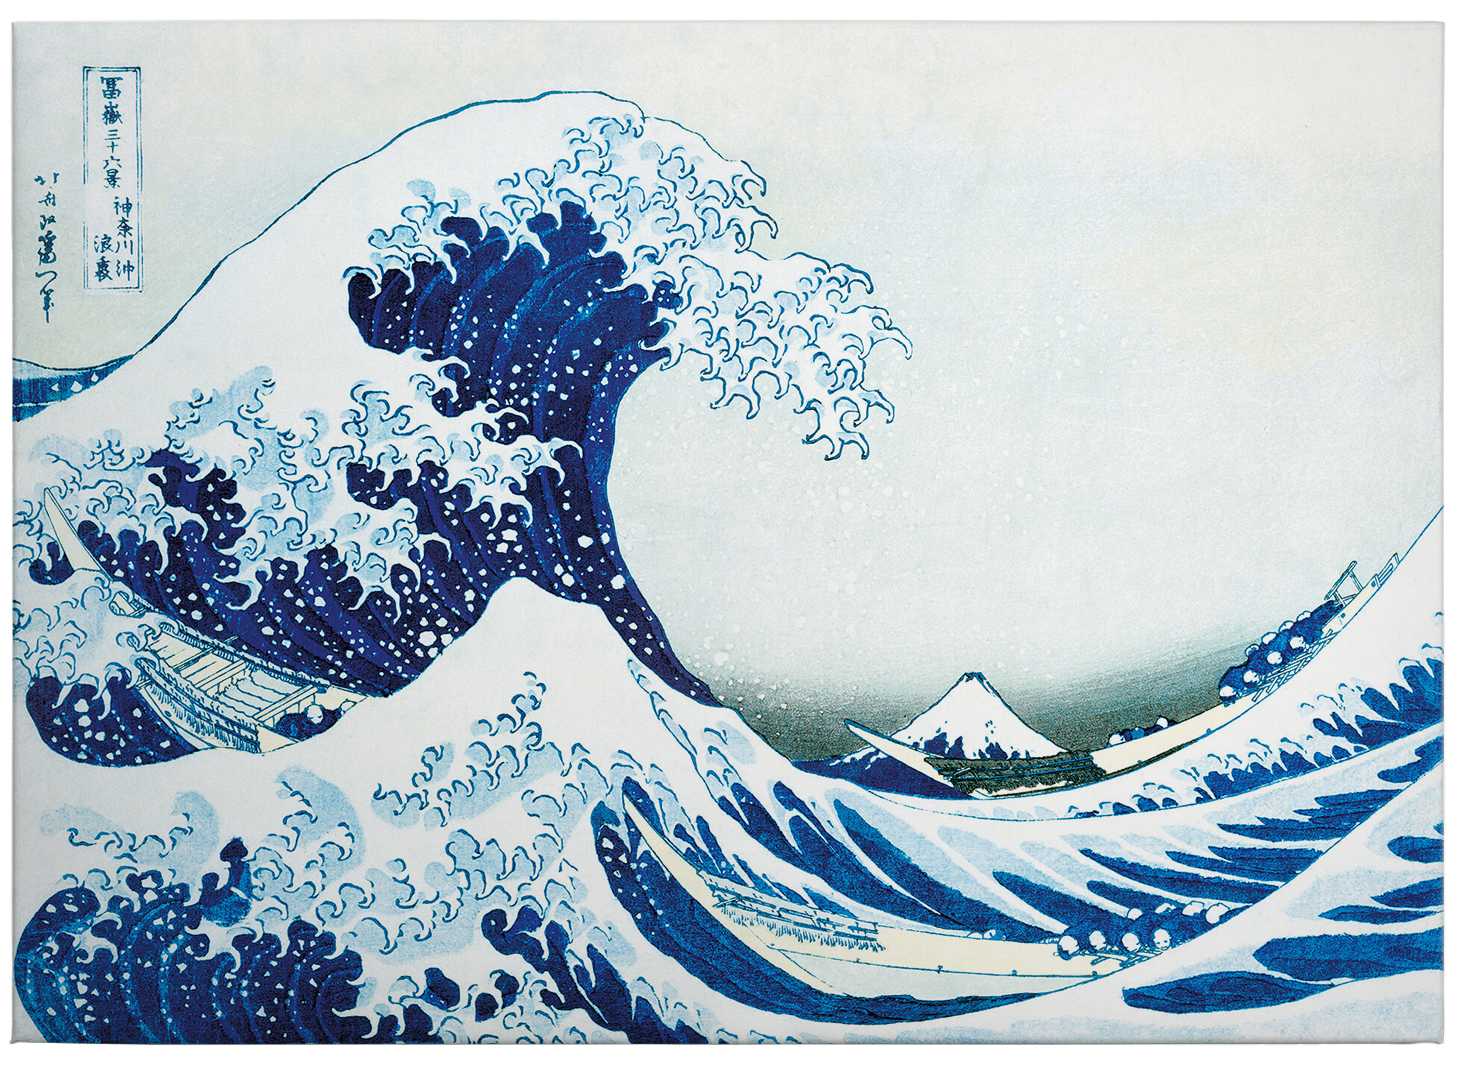             Canvas schilderij "De grote golf bij Kanagawa" van Hokusai - 0,70 m x 0,50 m
        